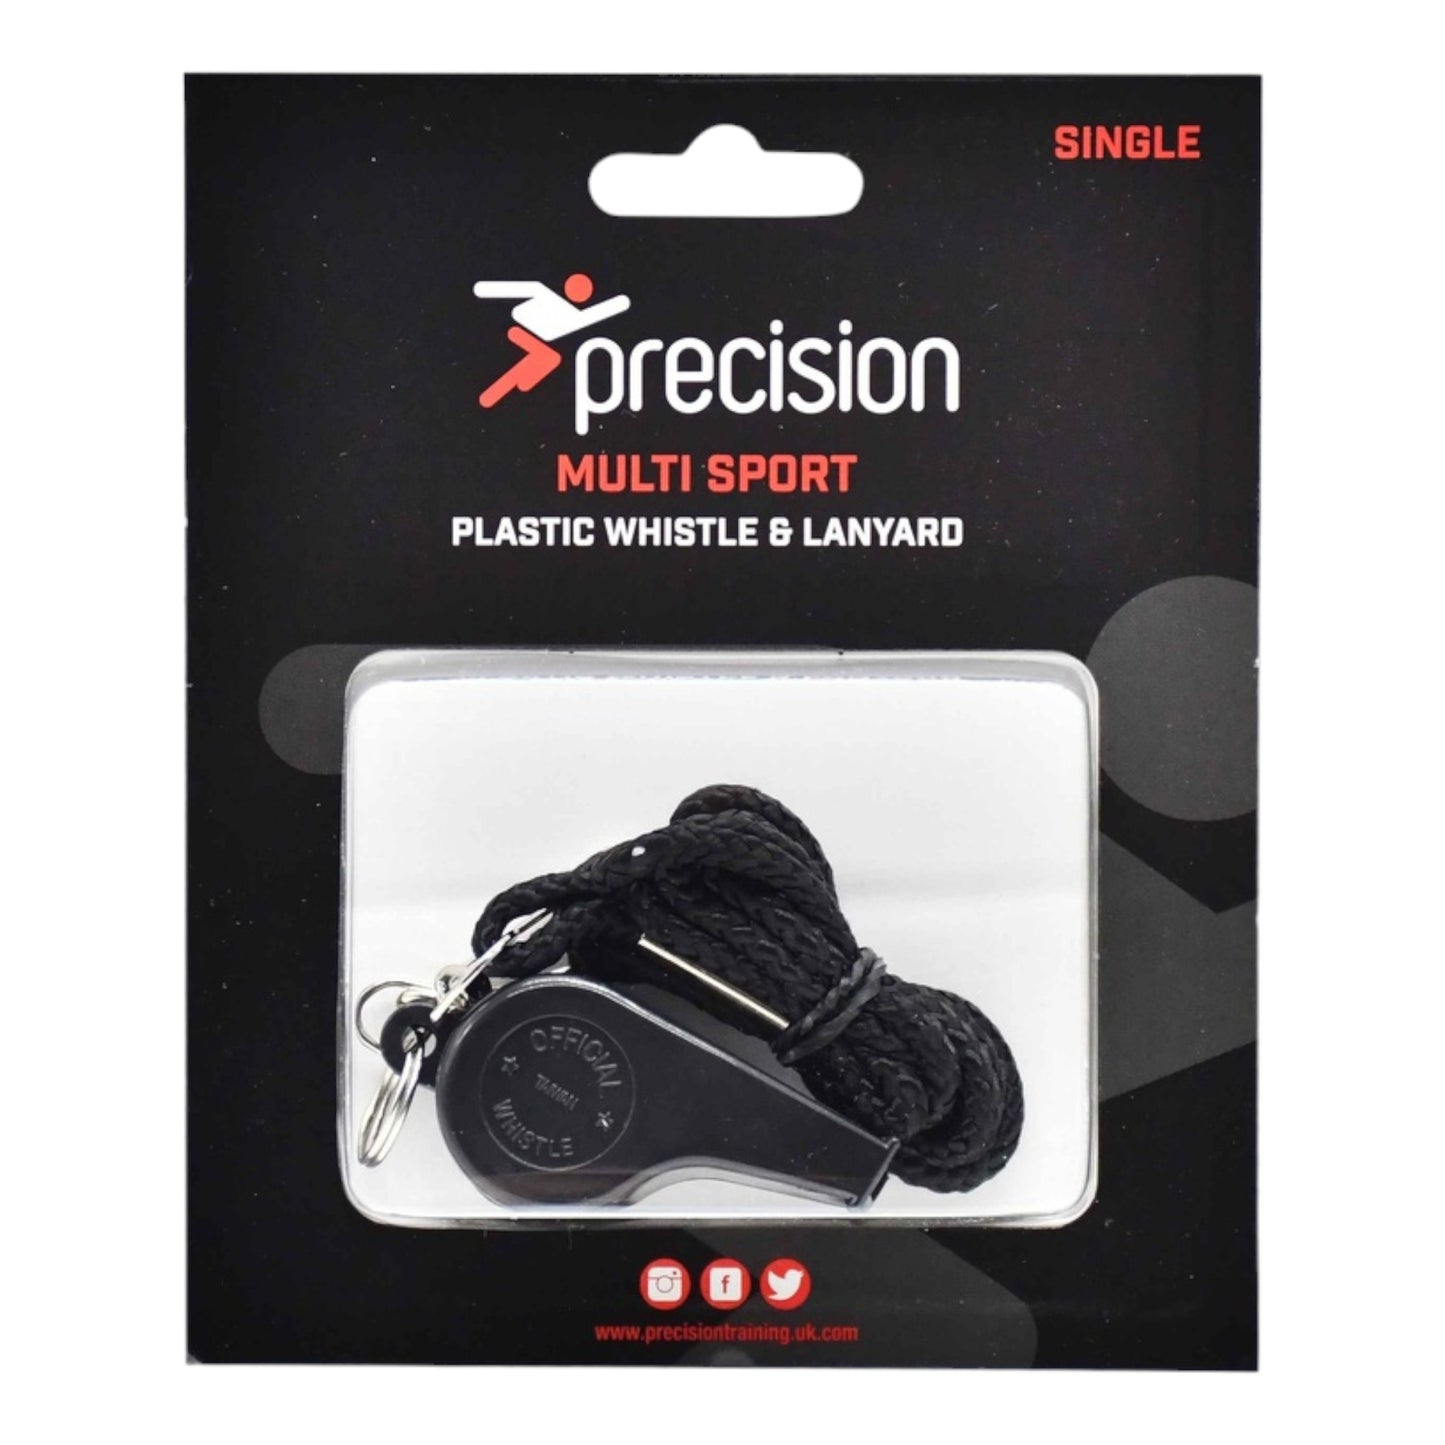 Precision Plastic Whistle & Lanyard (Single) Black